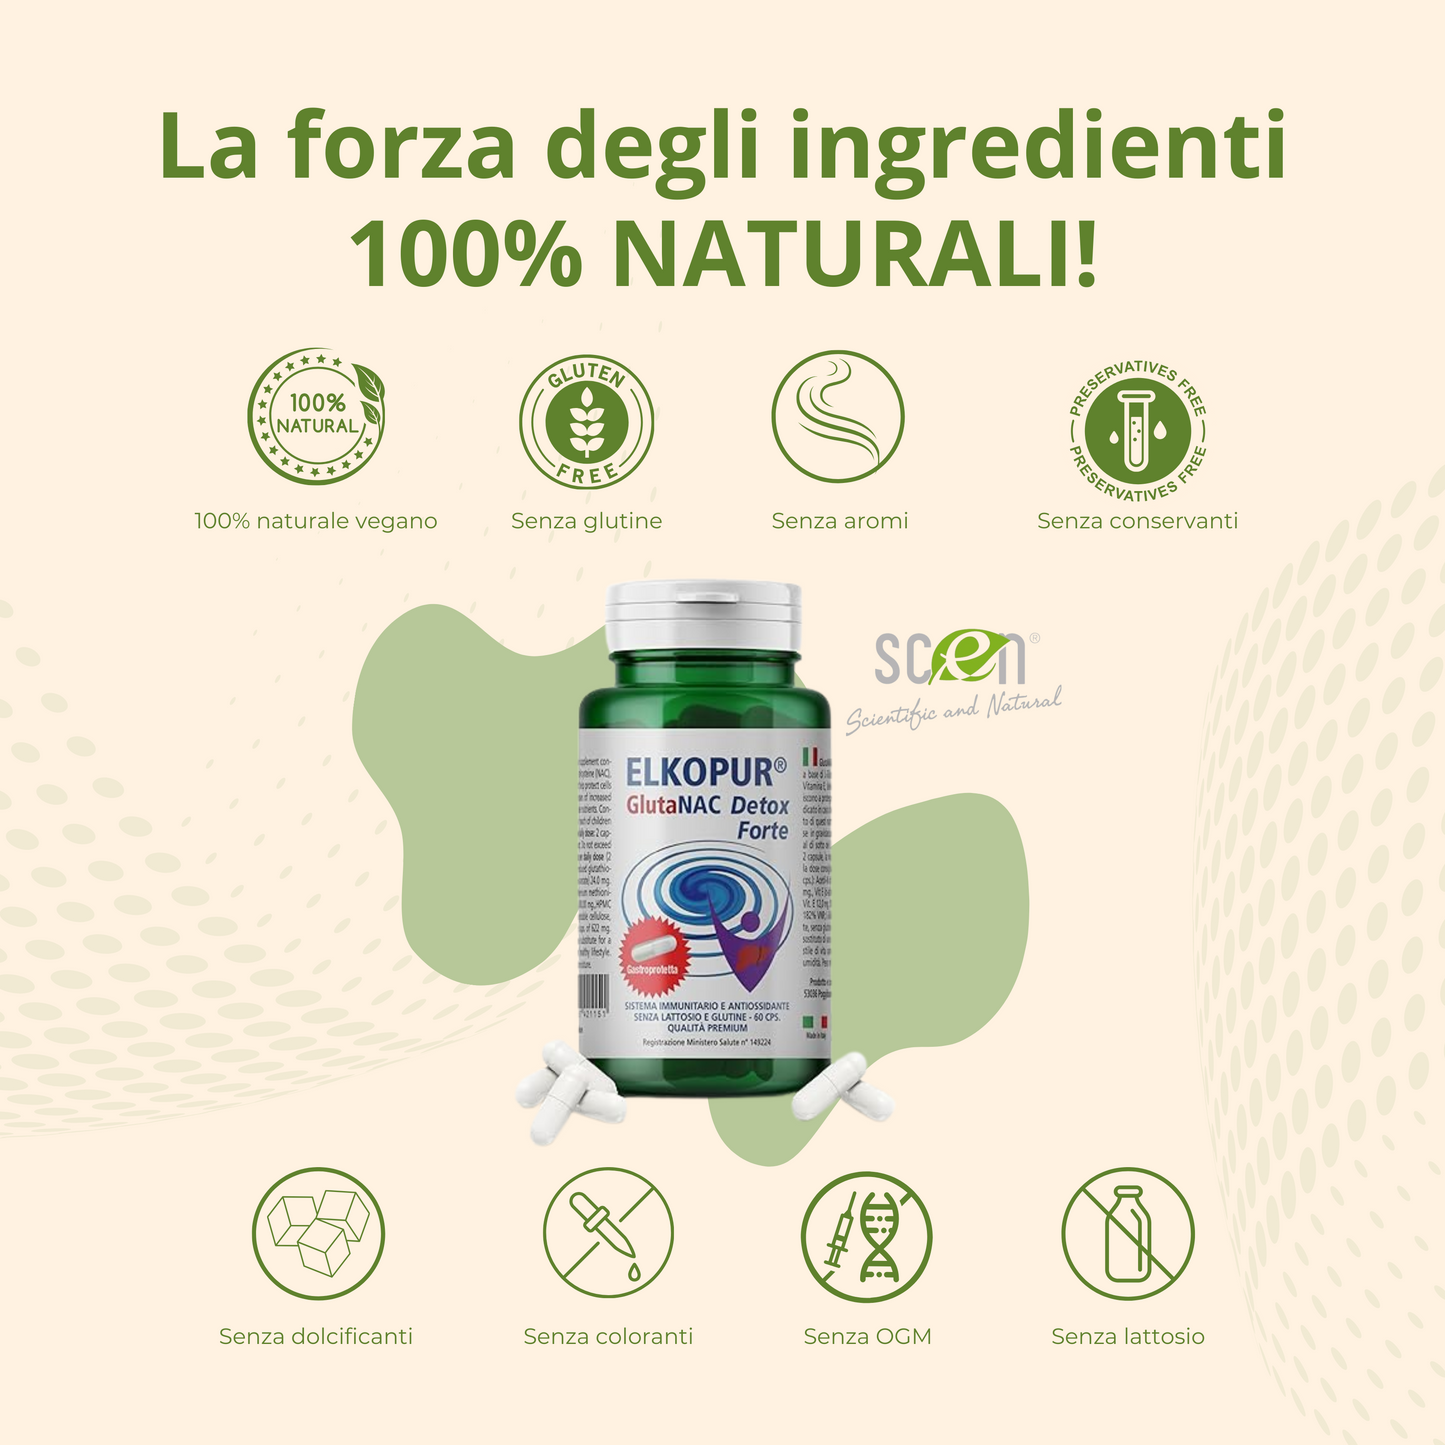 Elkopur GlutaNAC Detox - Food supplement of reduced L-Glutathione, N-Acetylcysteine ​​(NAC), Vitamin E, Selenium, Vegetable gastro-resistant capsules, made in Italy